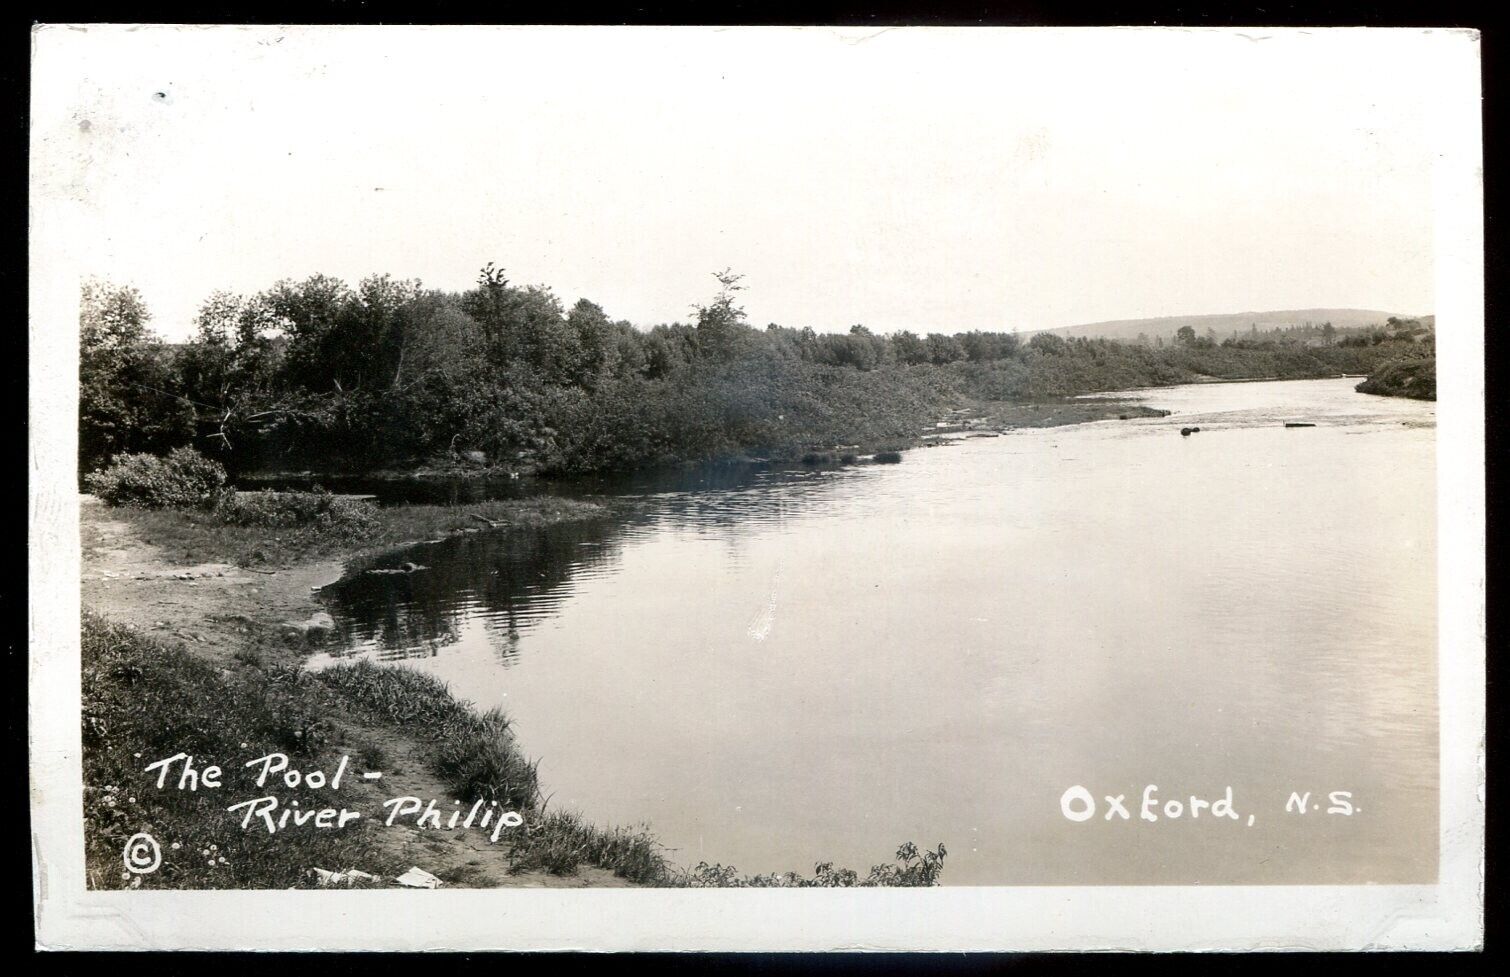 OXFORD Nova Scotia Postcard 1930s River Philip Pool. Real Photo Postcard